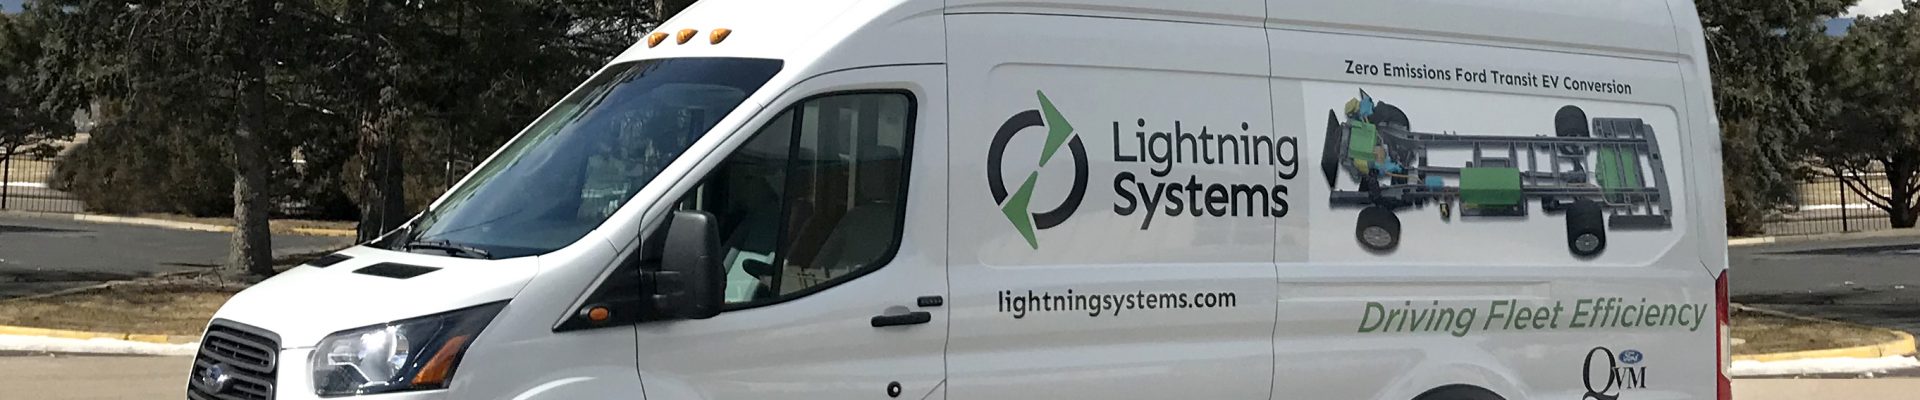 Lightning System Zero Emmisions